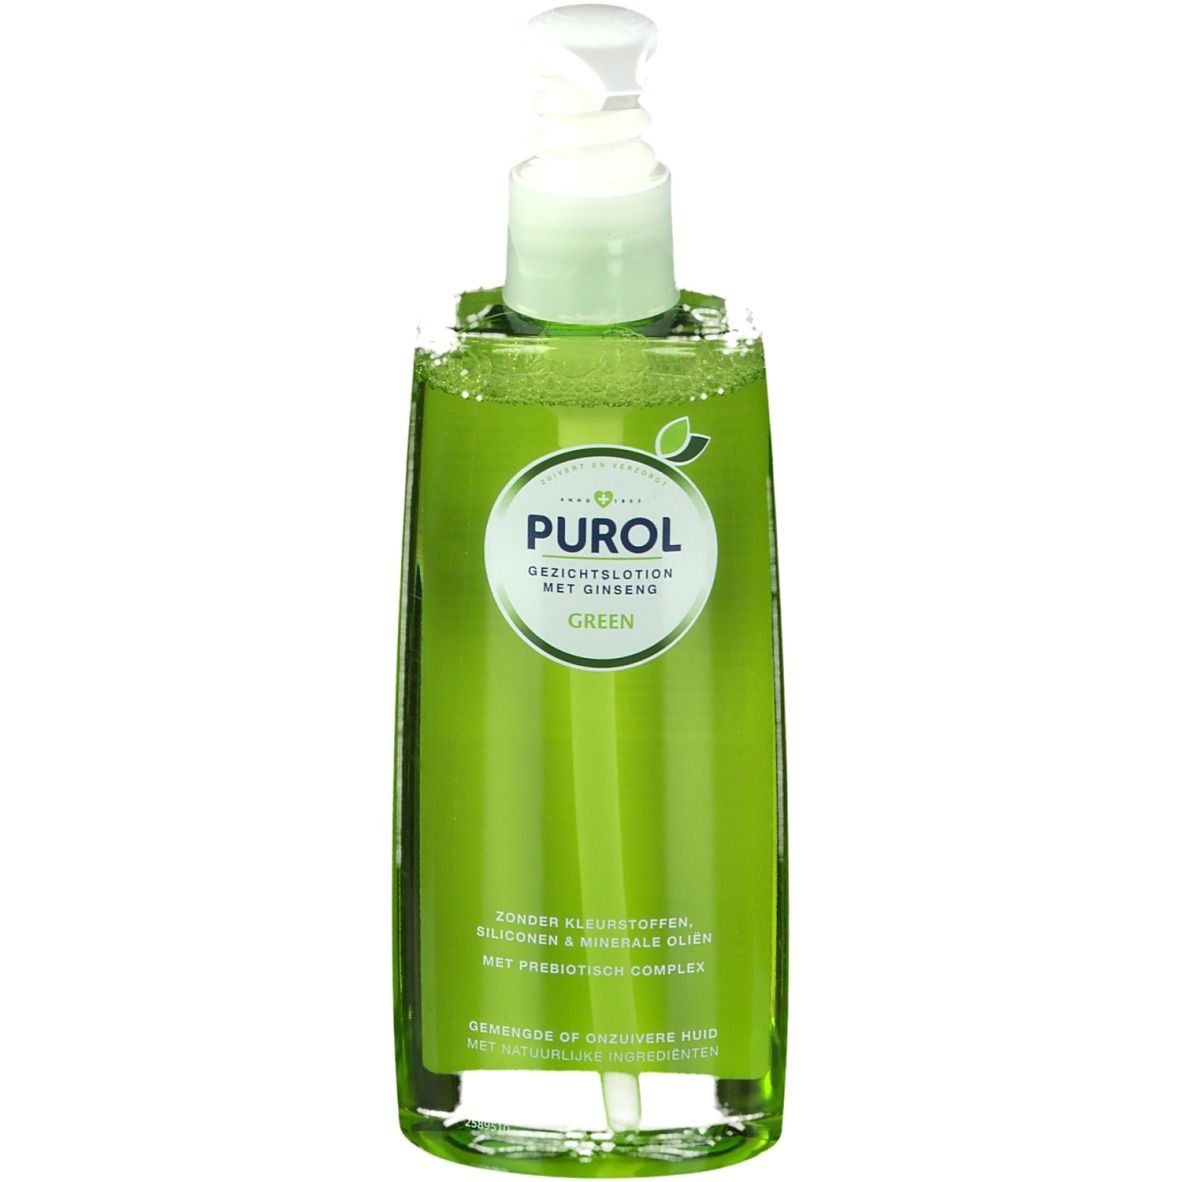 Image of PUROL Green Gesichtslotion